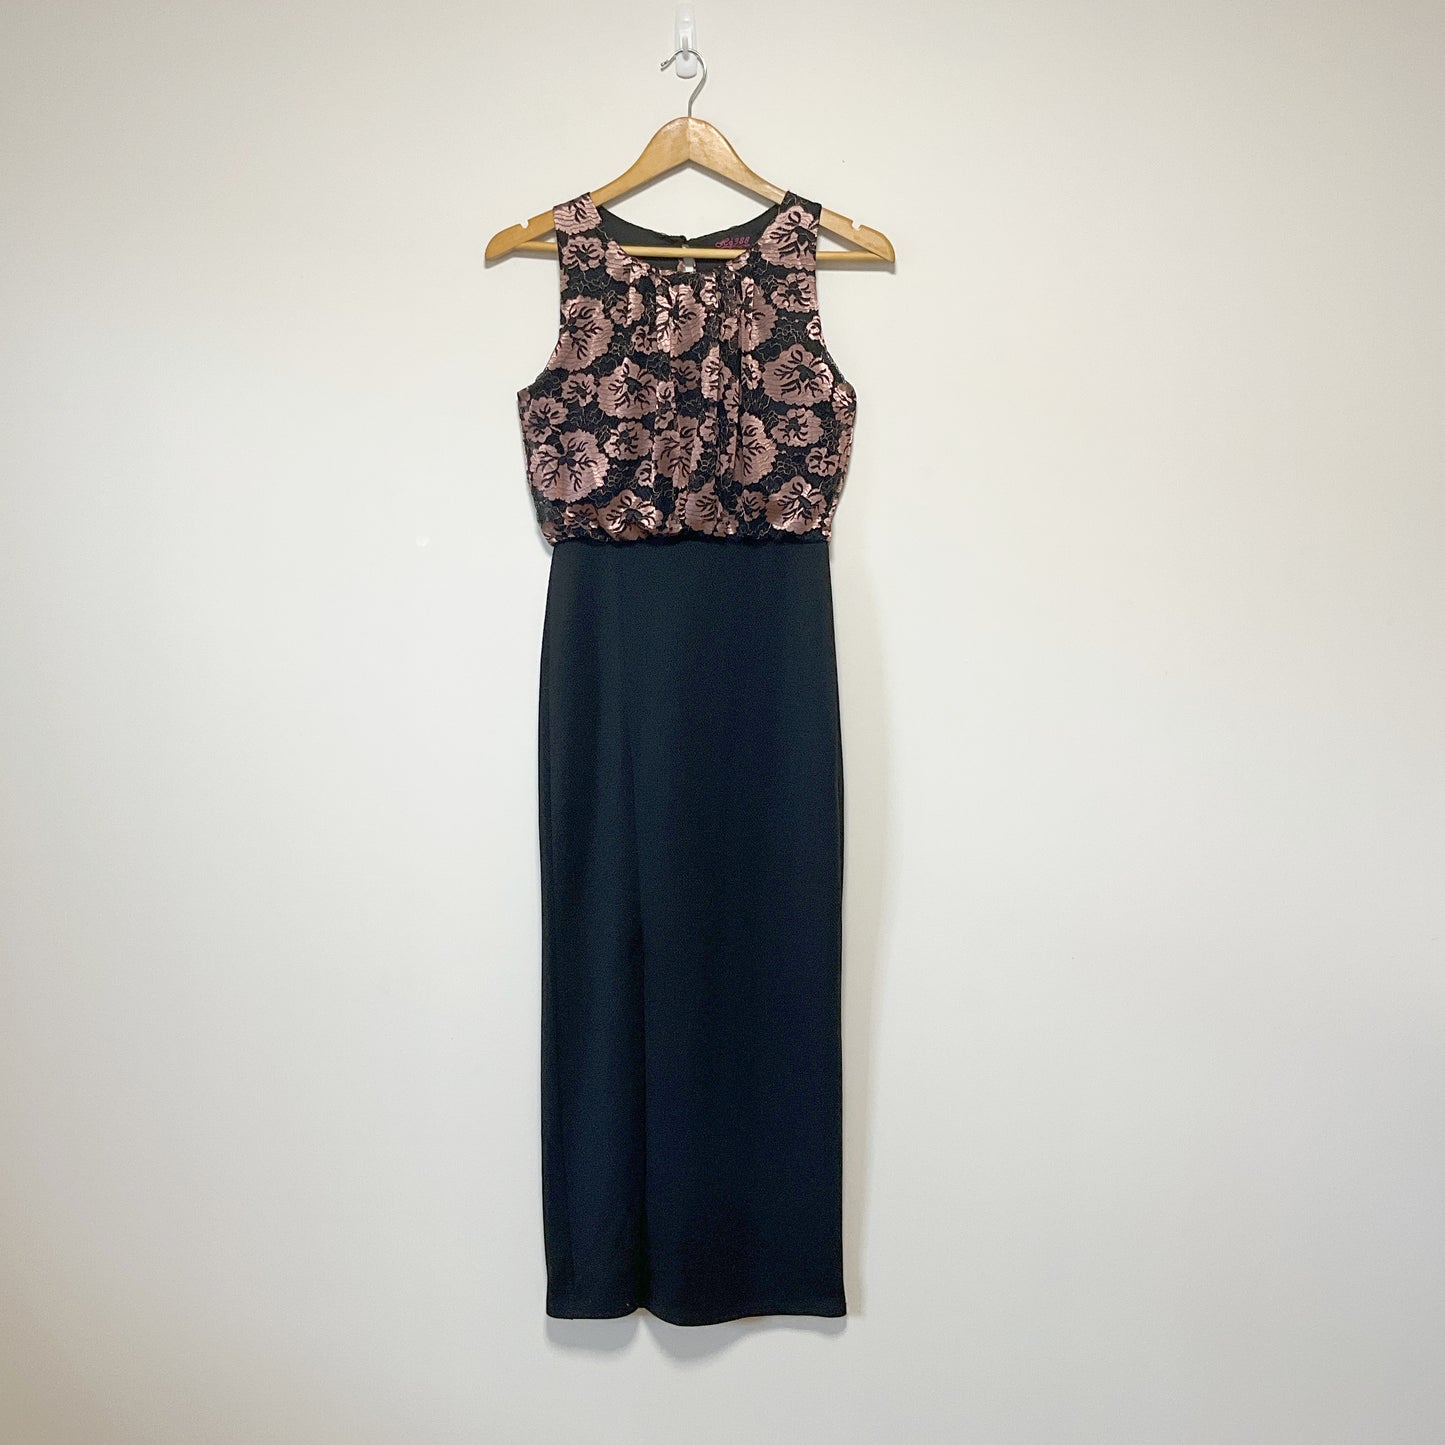 Jej388 Collection - Floral Maxi Dress